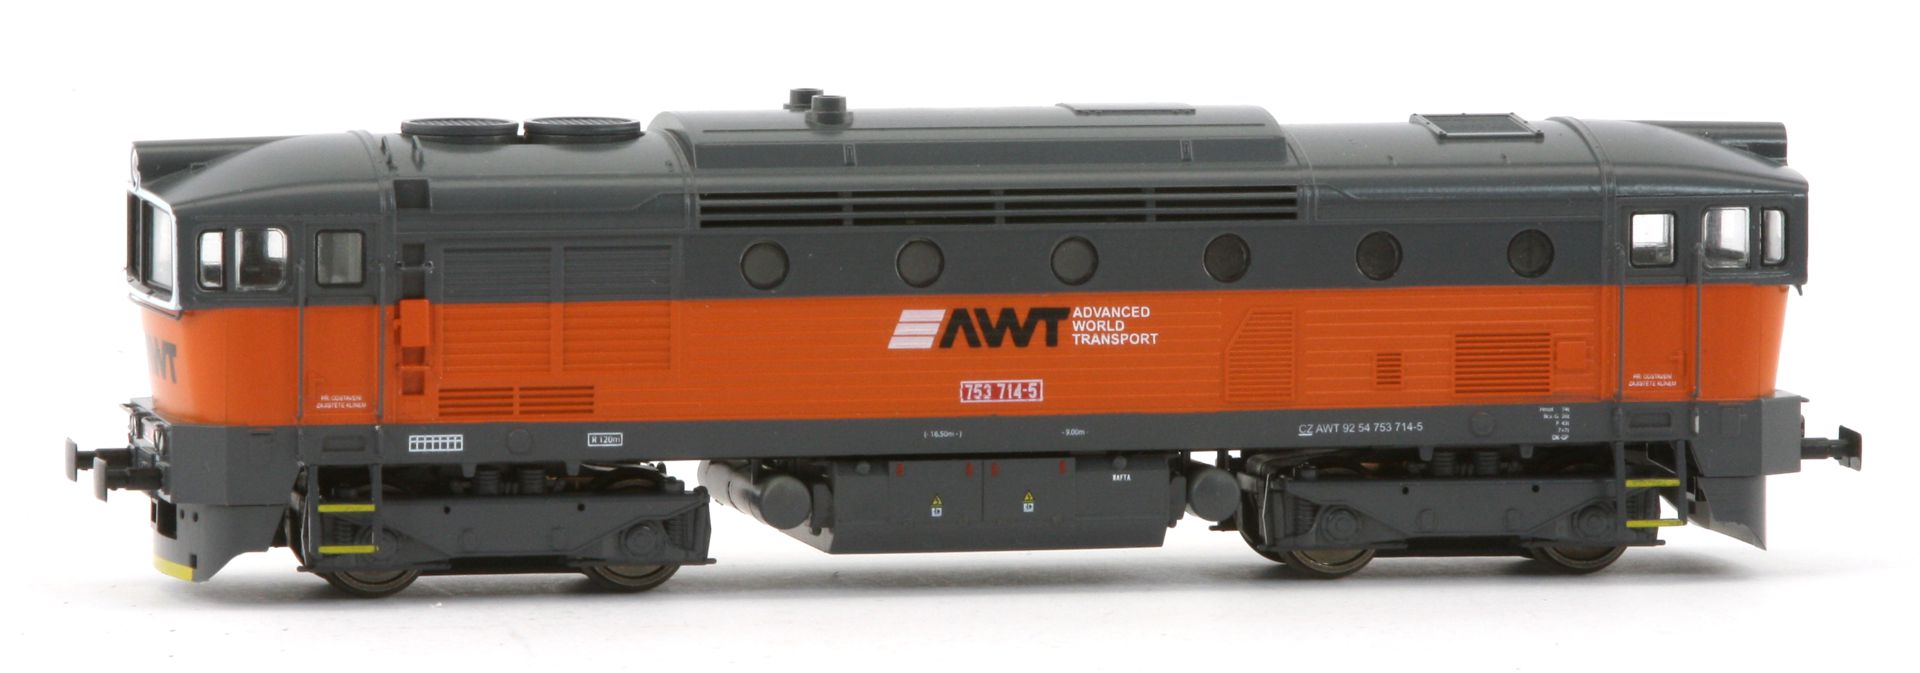 mtb H0AWT753714 - Diesellok 753 714, AWT, Ep.V